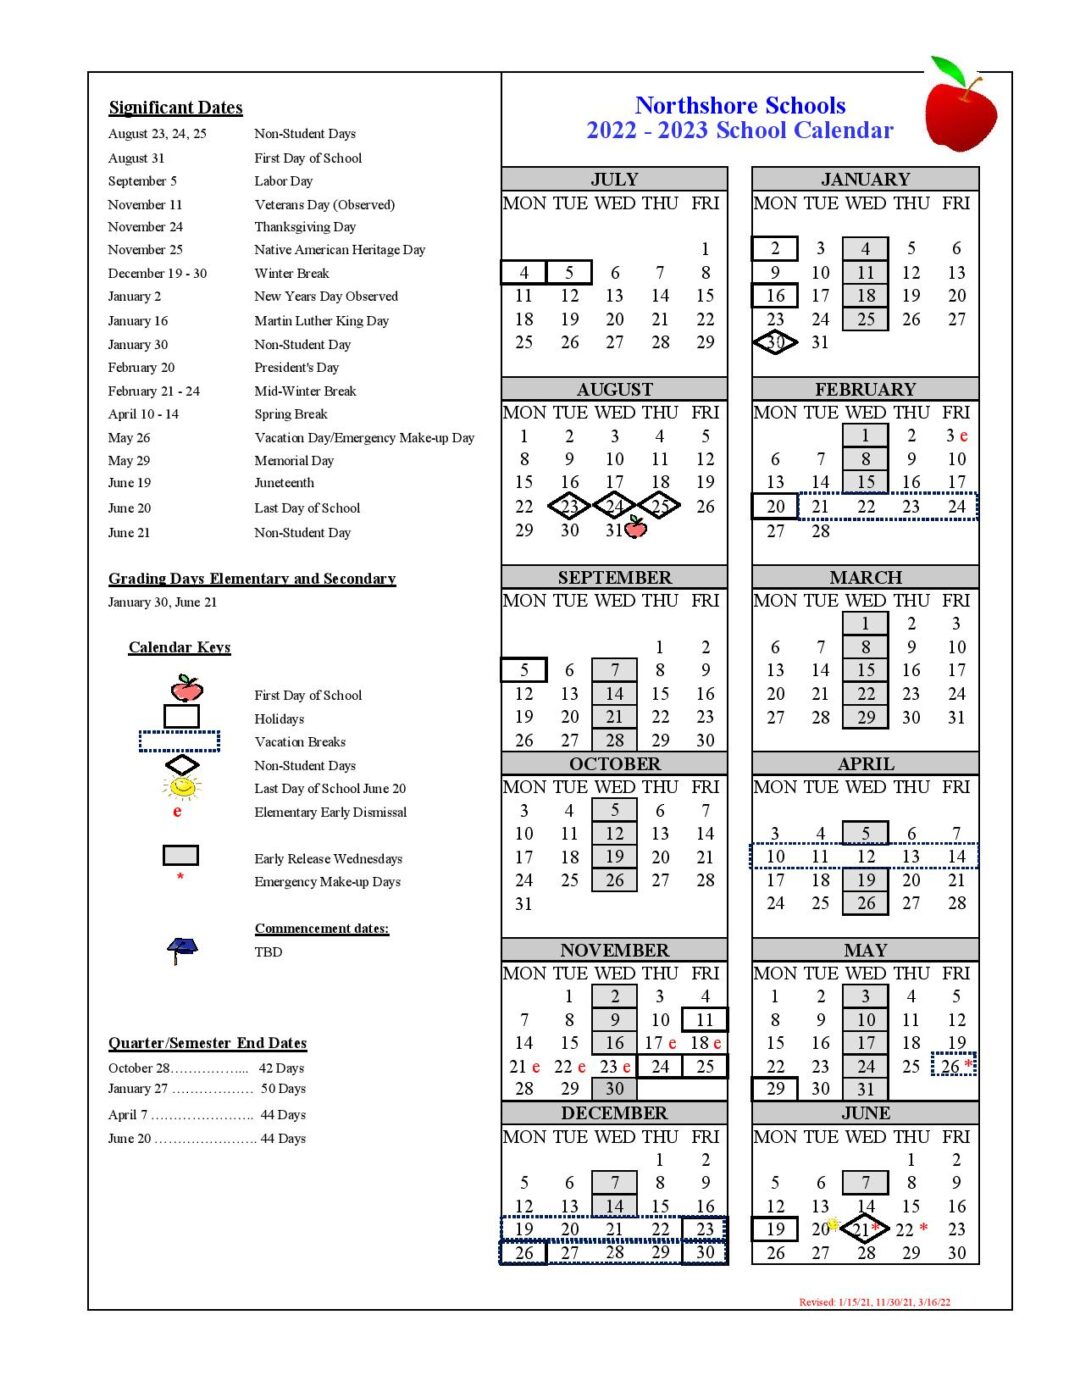 Northshore School District Calendar 20222023 & Holidays